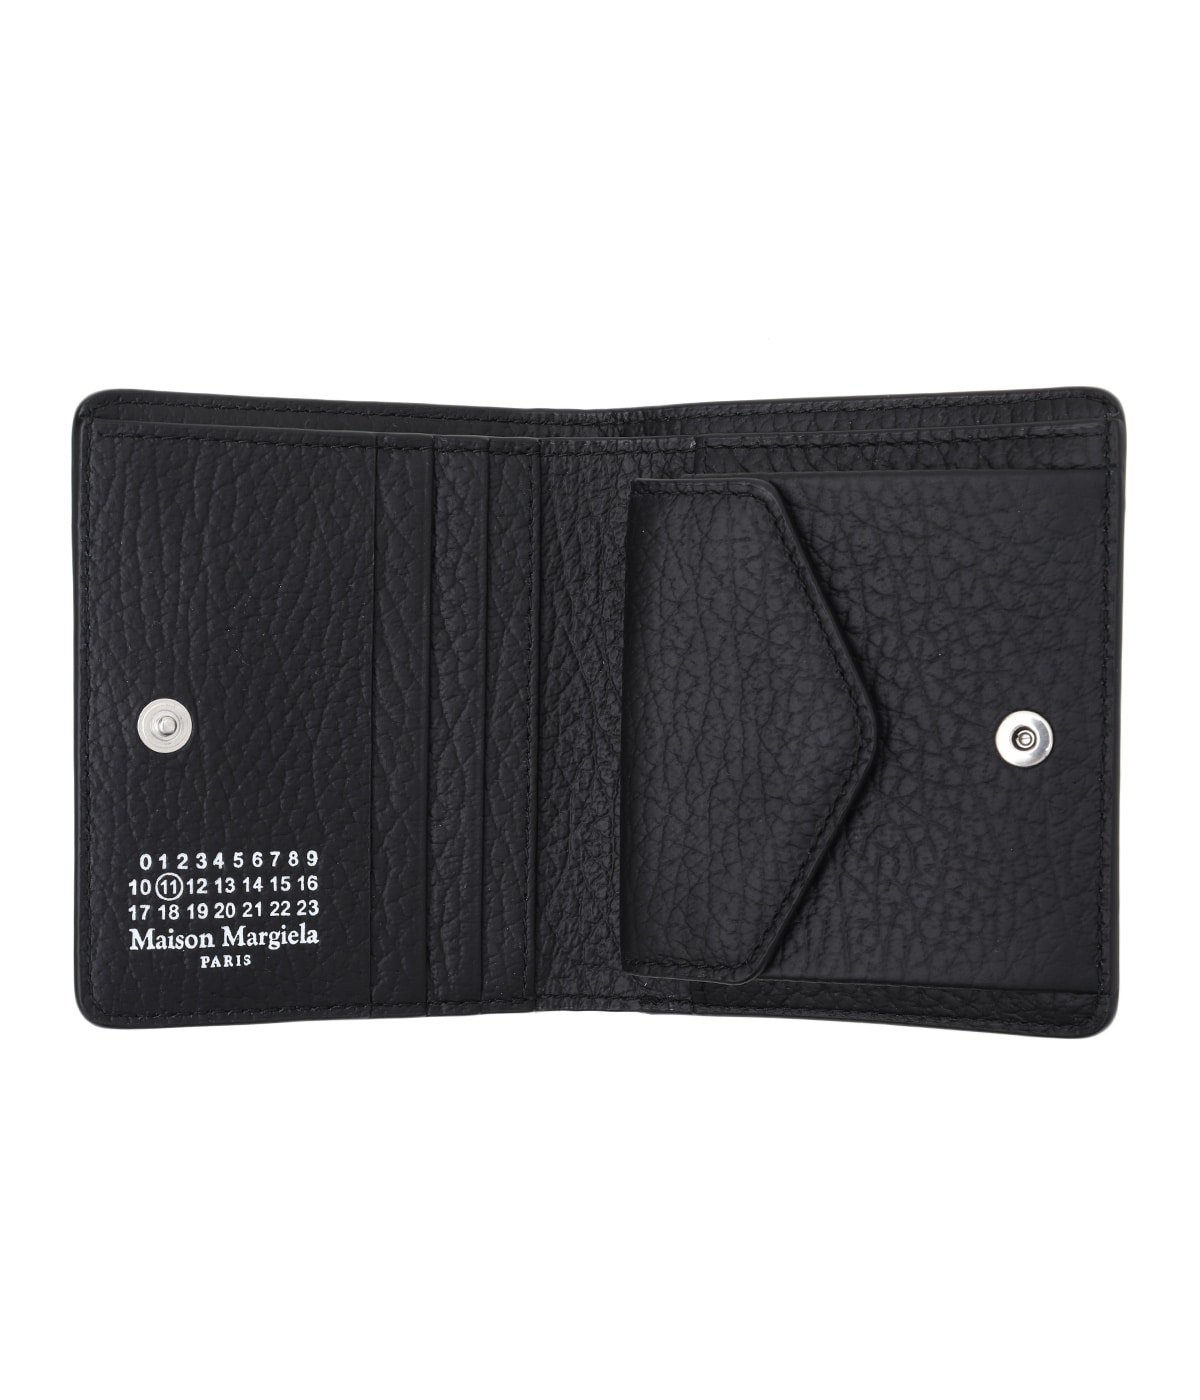 Maison Margiela compact Bifold wallet 新品